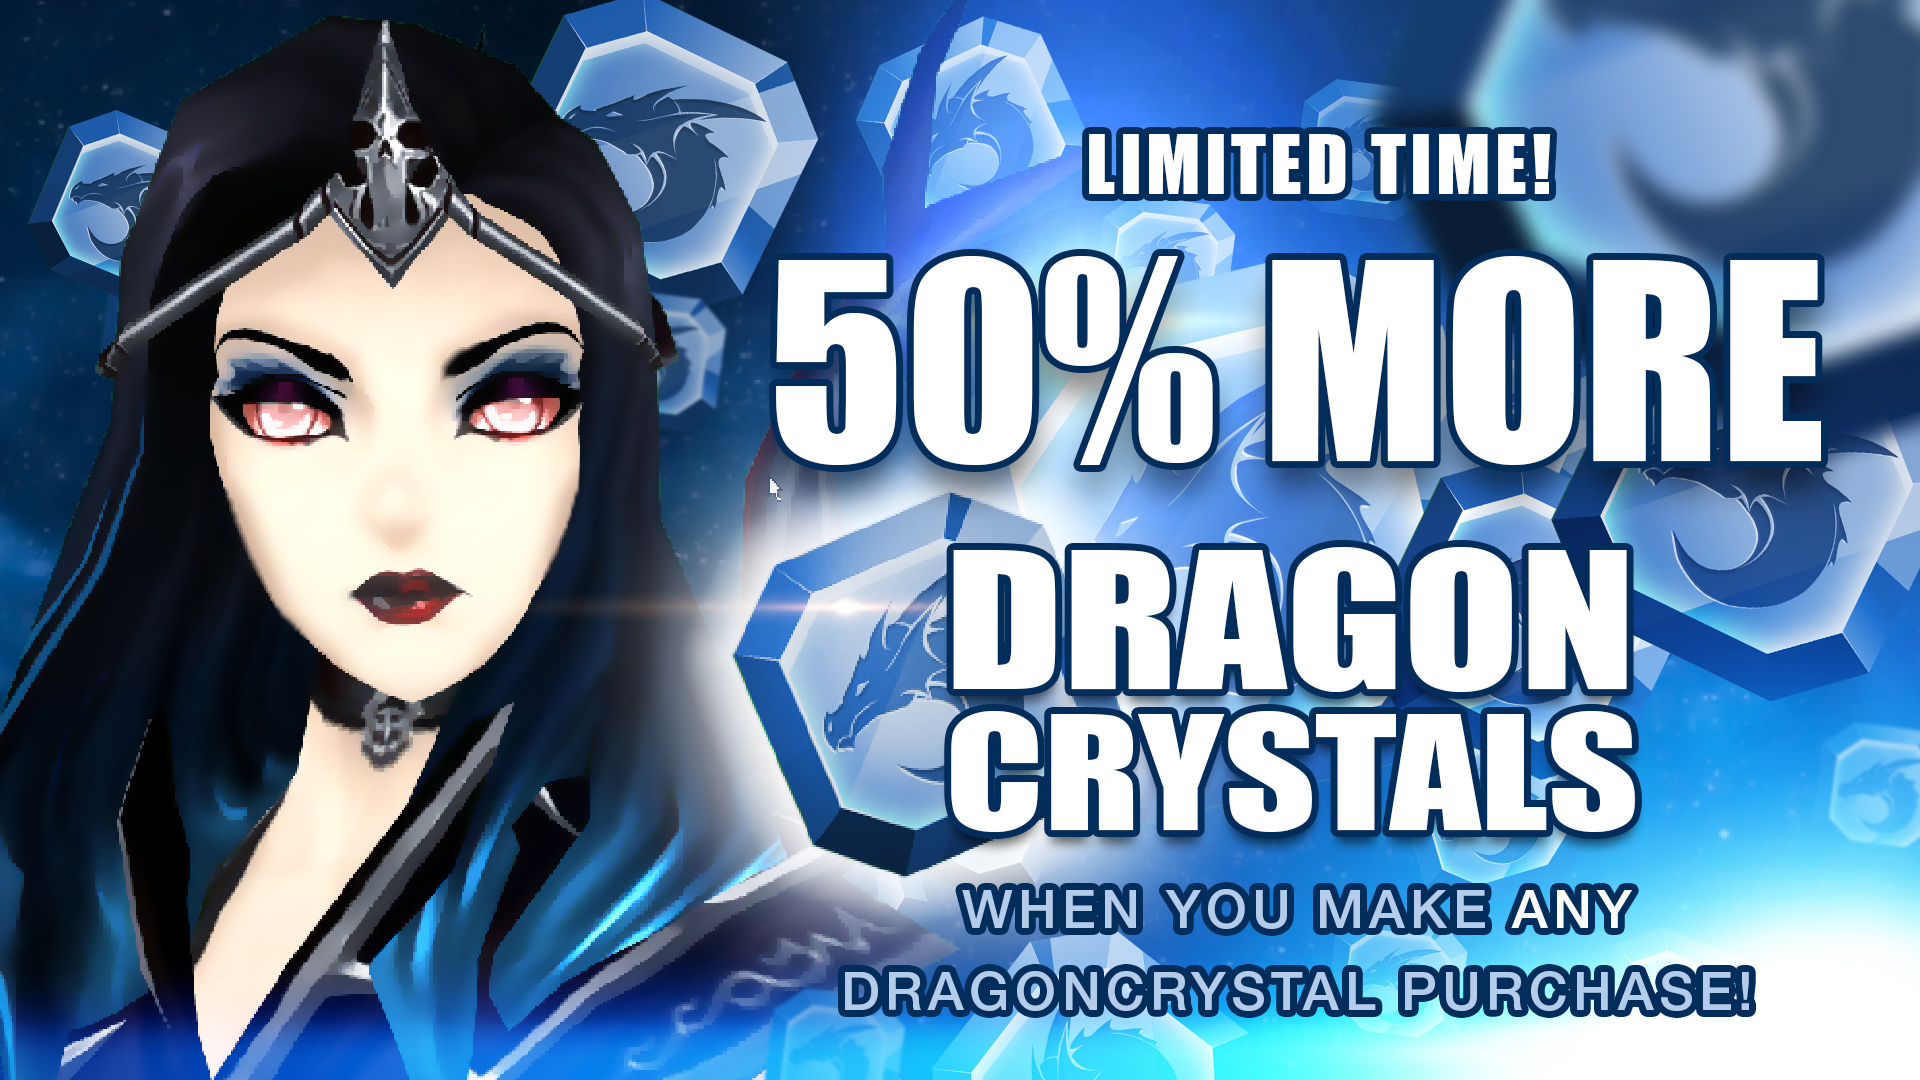 Crystal gets. Crystal Dragon game.